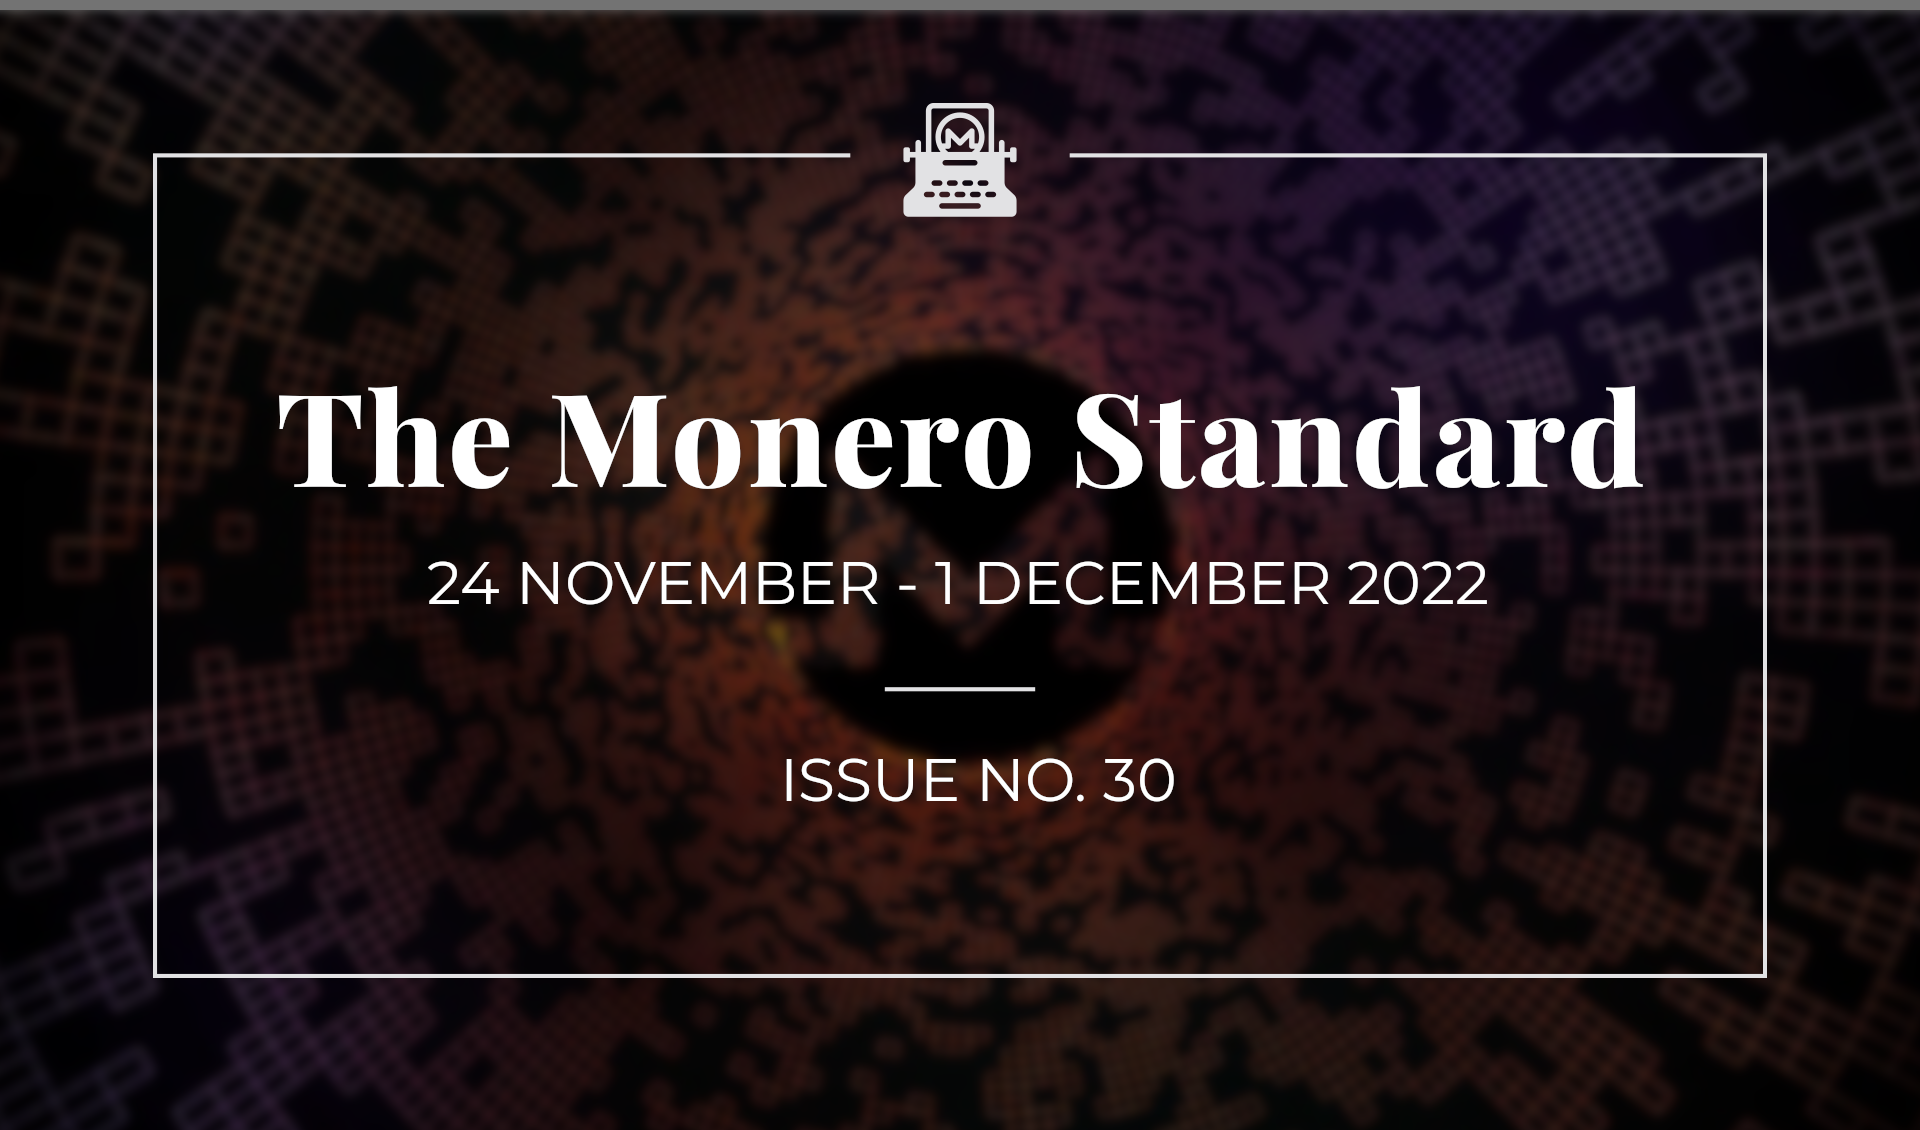 The Monero Standard #30: 24 November 2022 - 1 December 2022